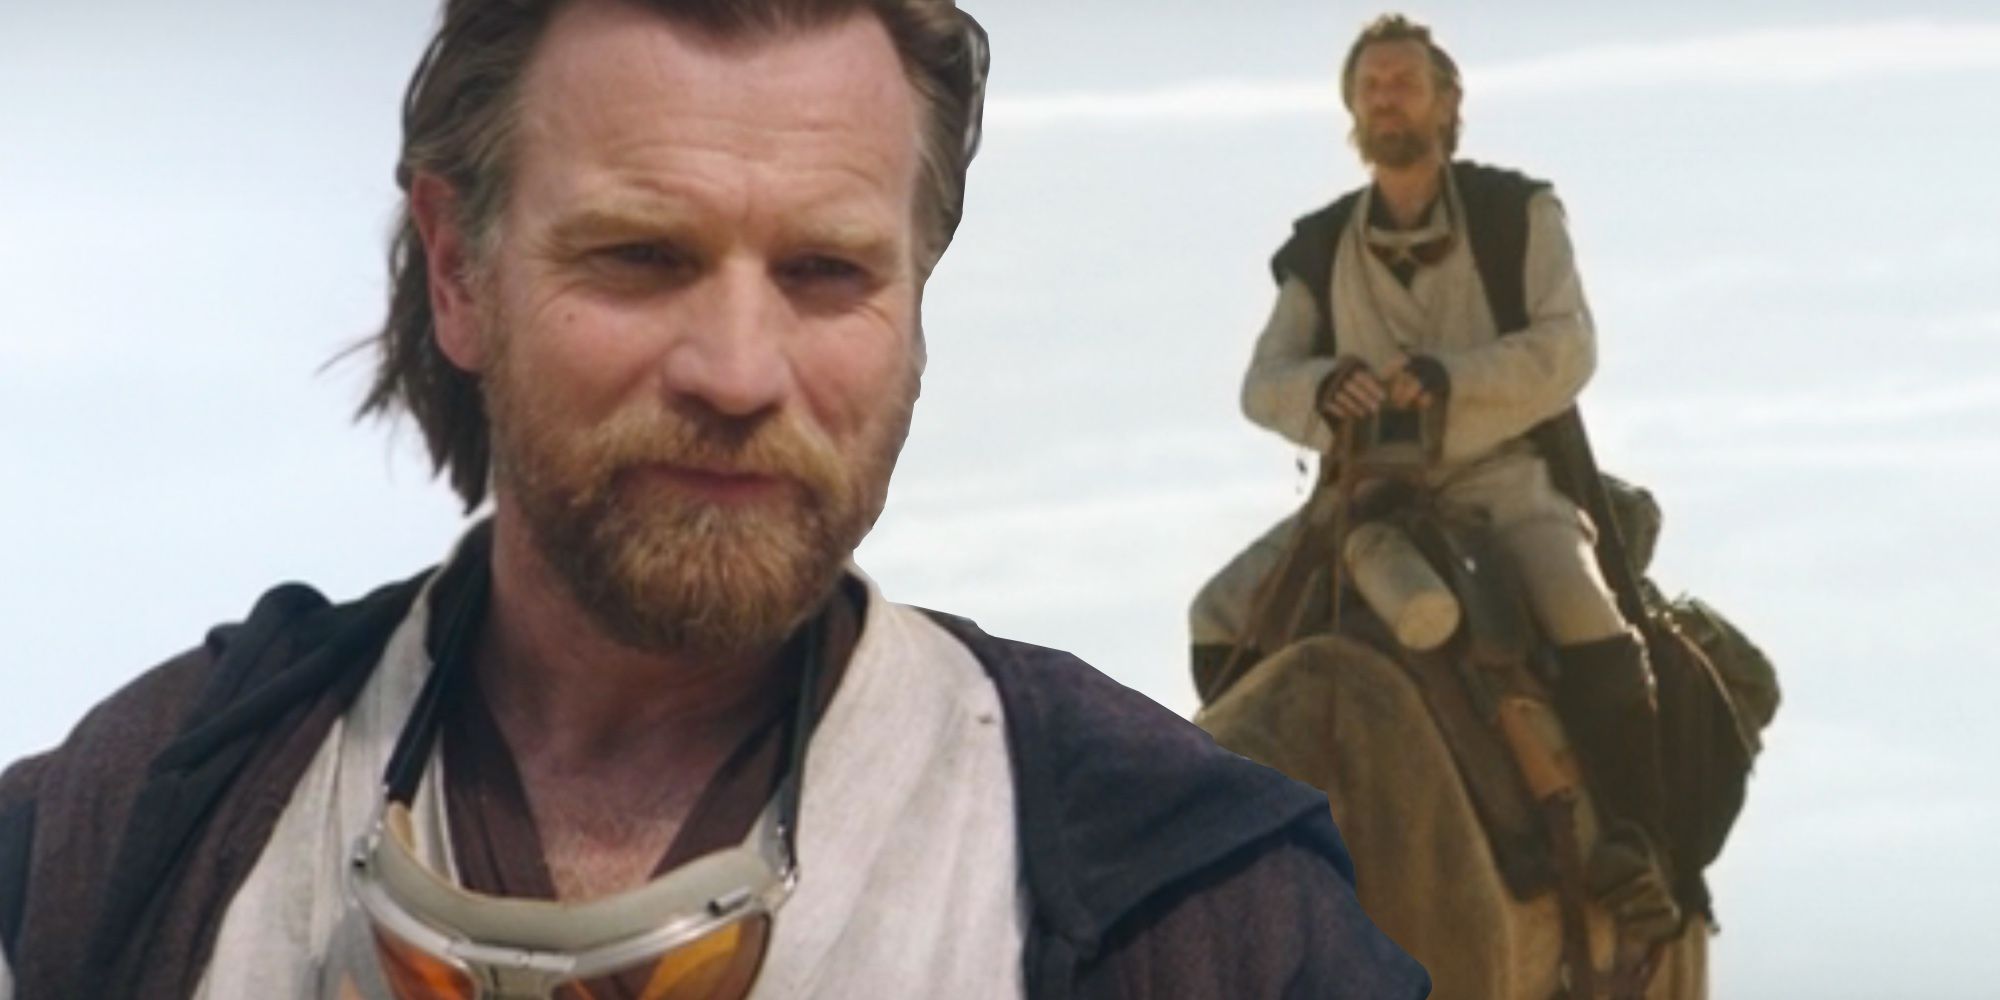 El disfraz final de Tatooine de Obi-Wan es una devolución de llamada secreta de Star Wars